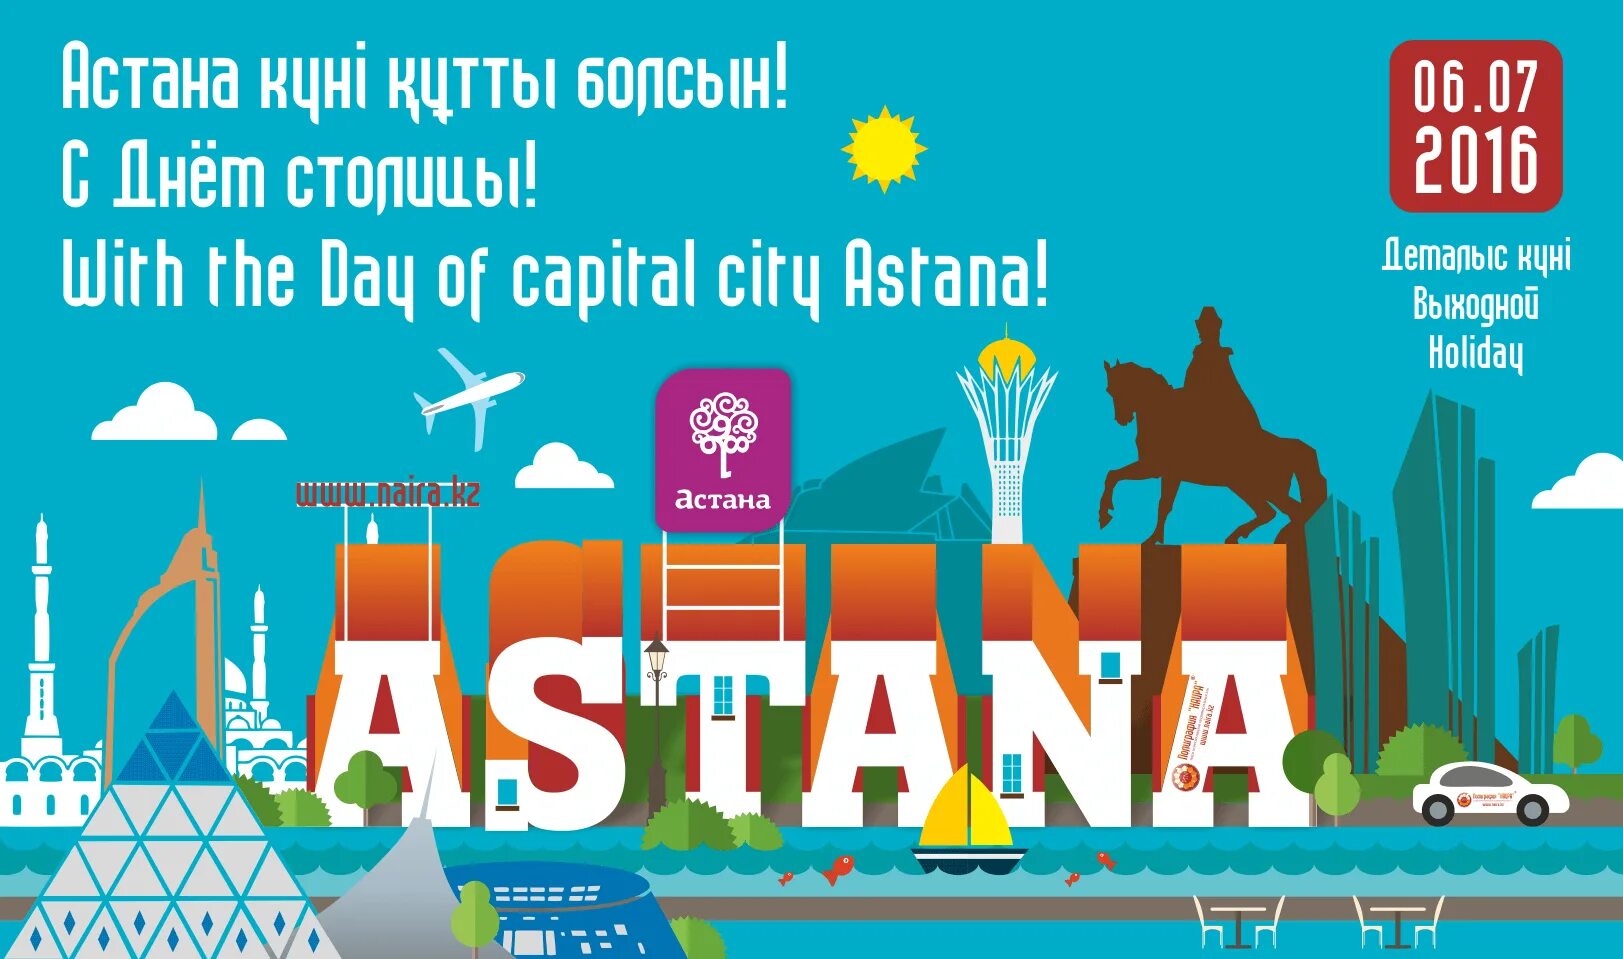 Астана слово. С днем Астаны. Баннер день города Астана. С днем столицы. День столицы Астана.